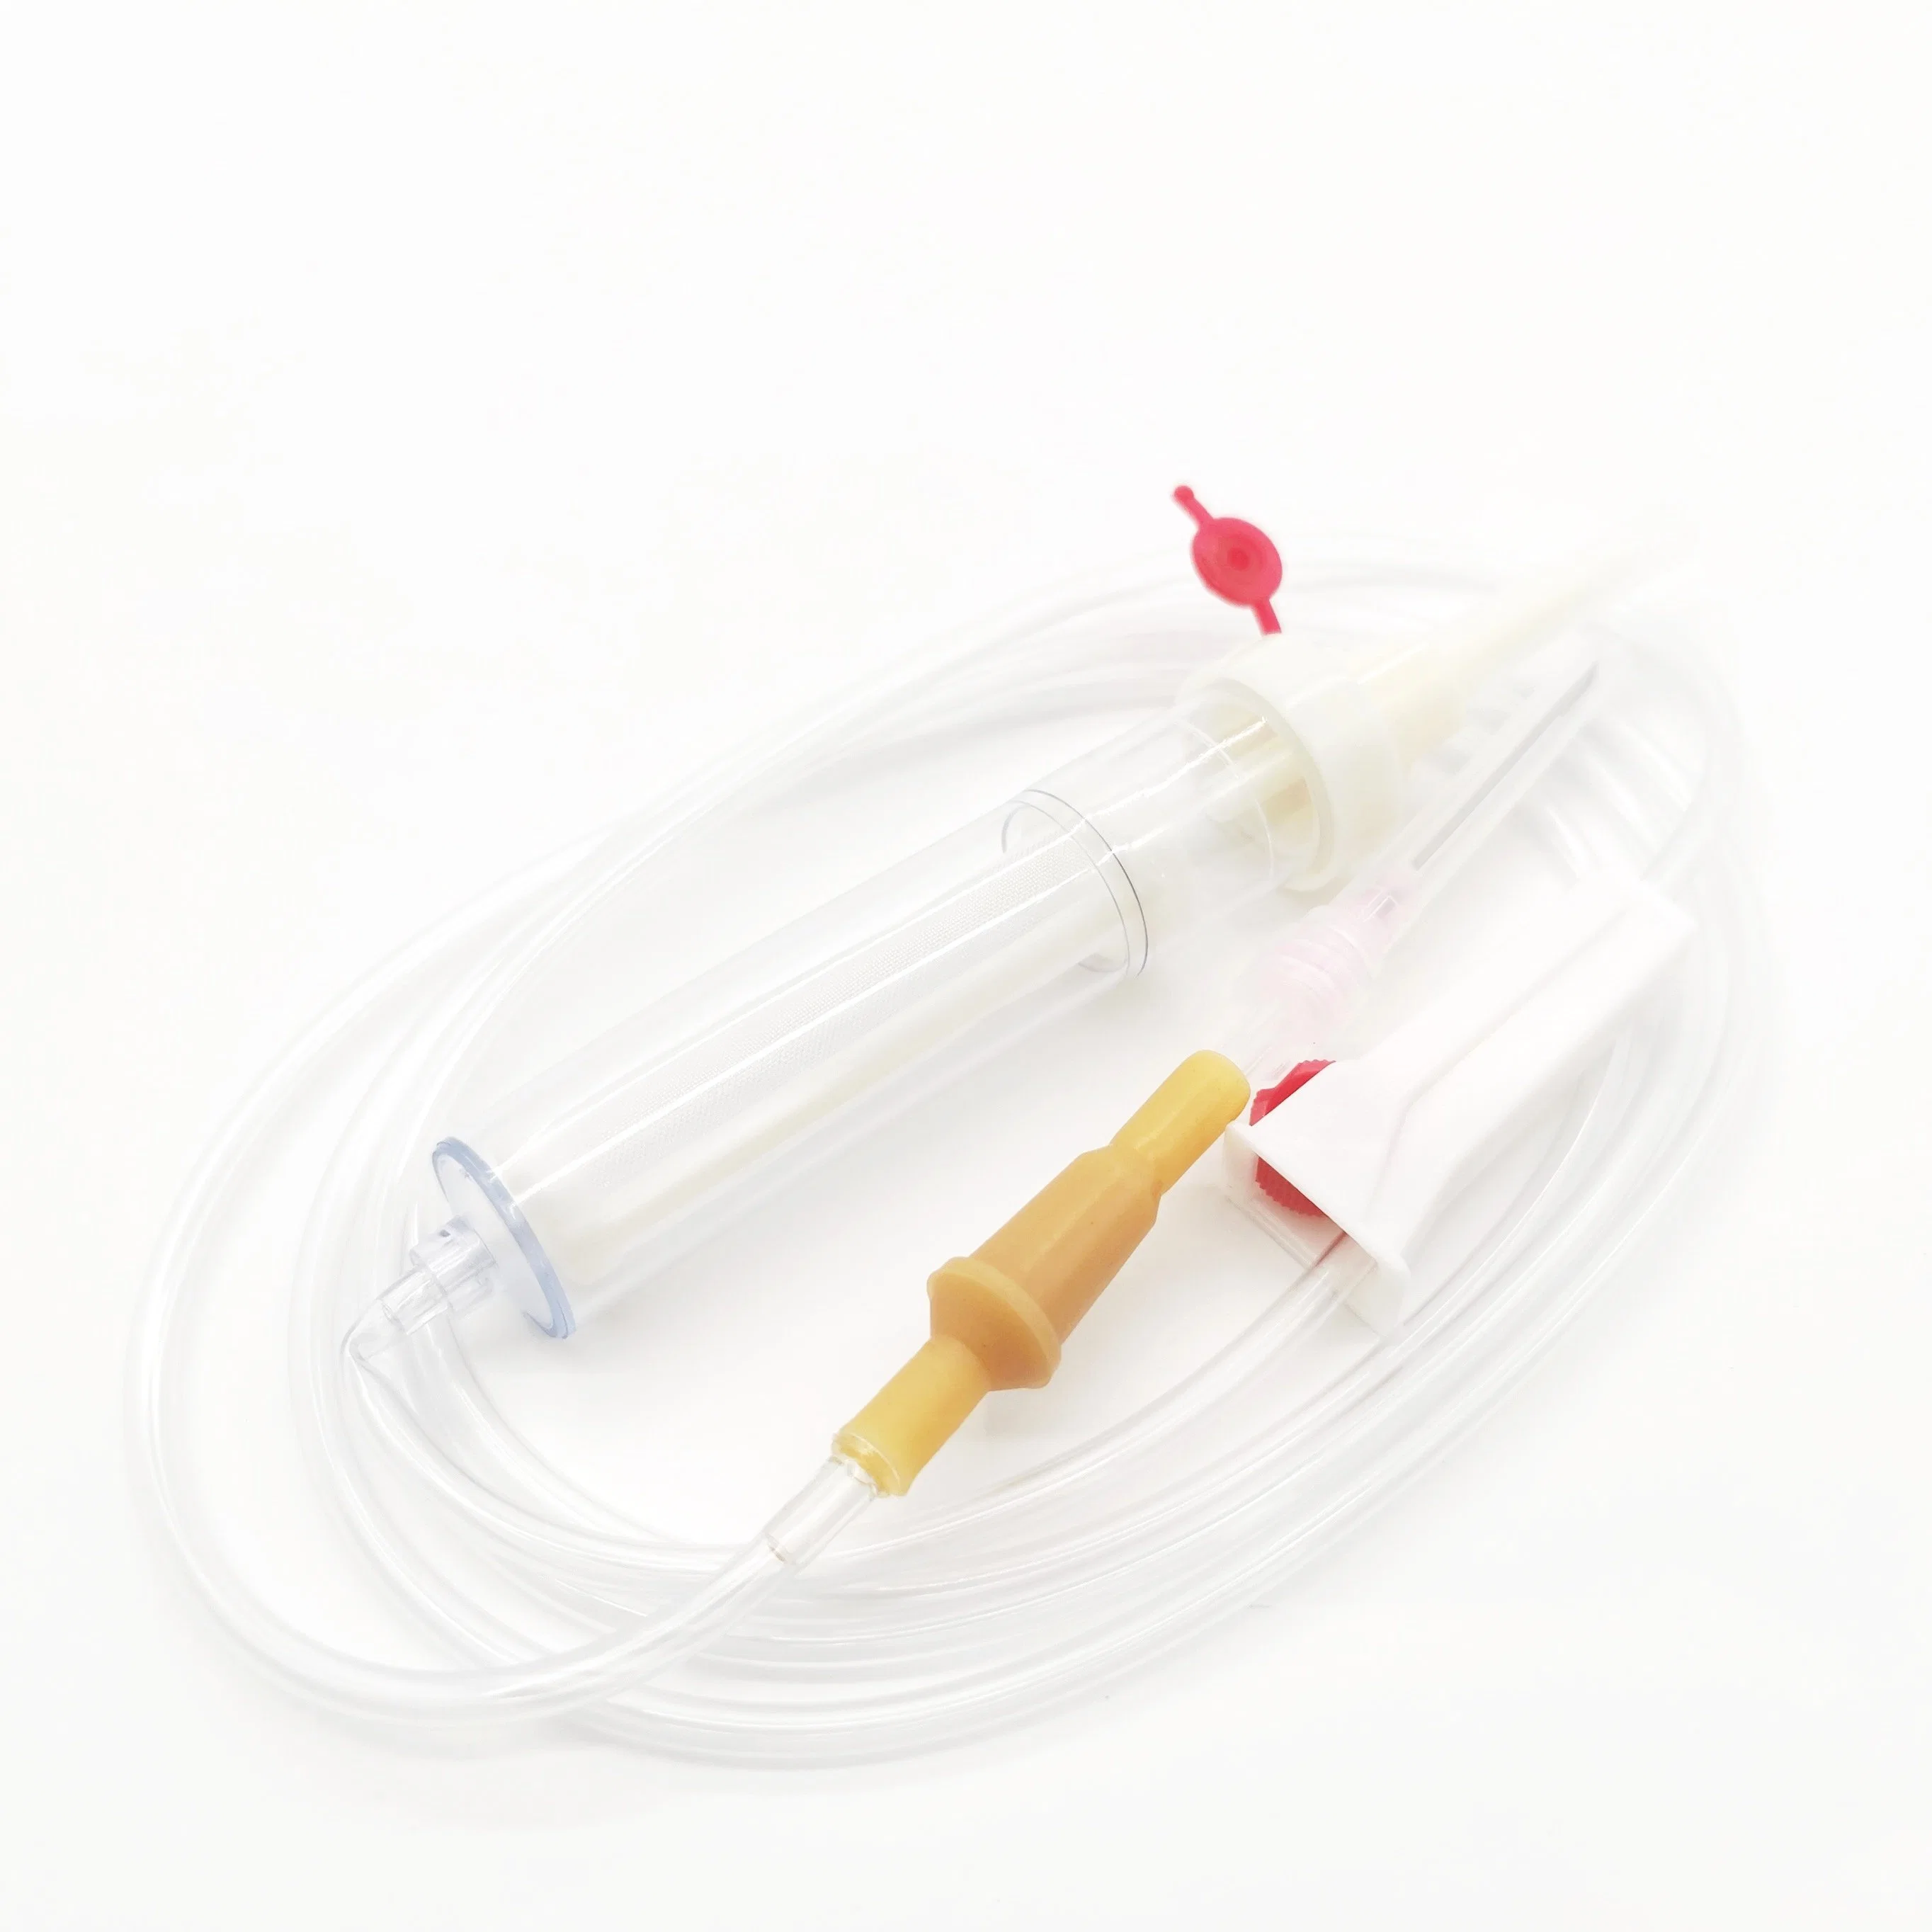 Disposable Sterilized Blood Transfusion Set 150cm PVC Tube with CE